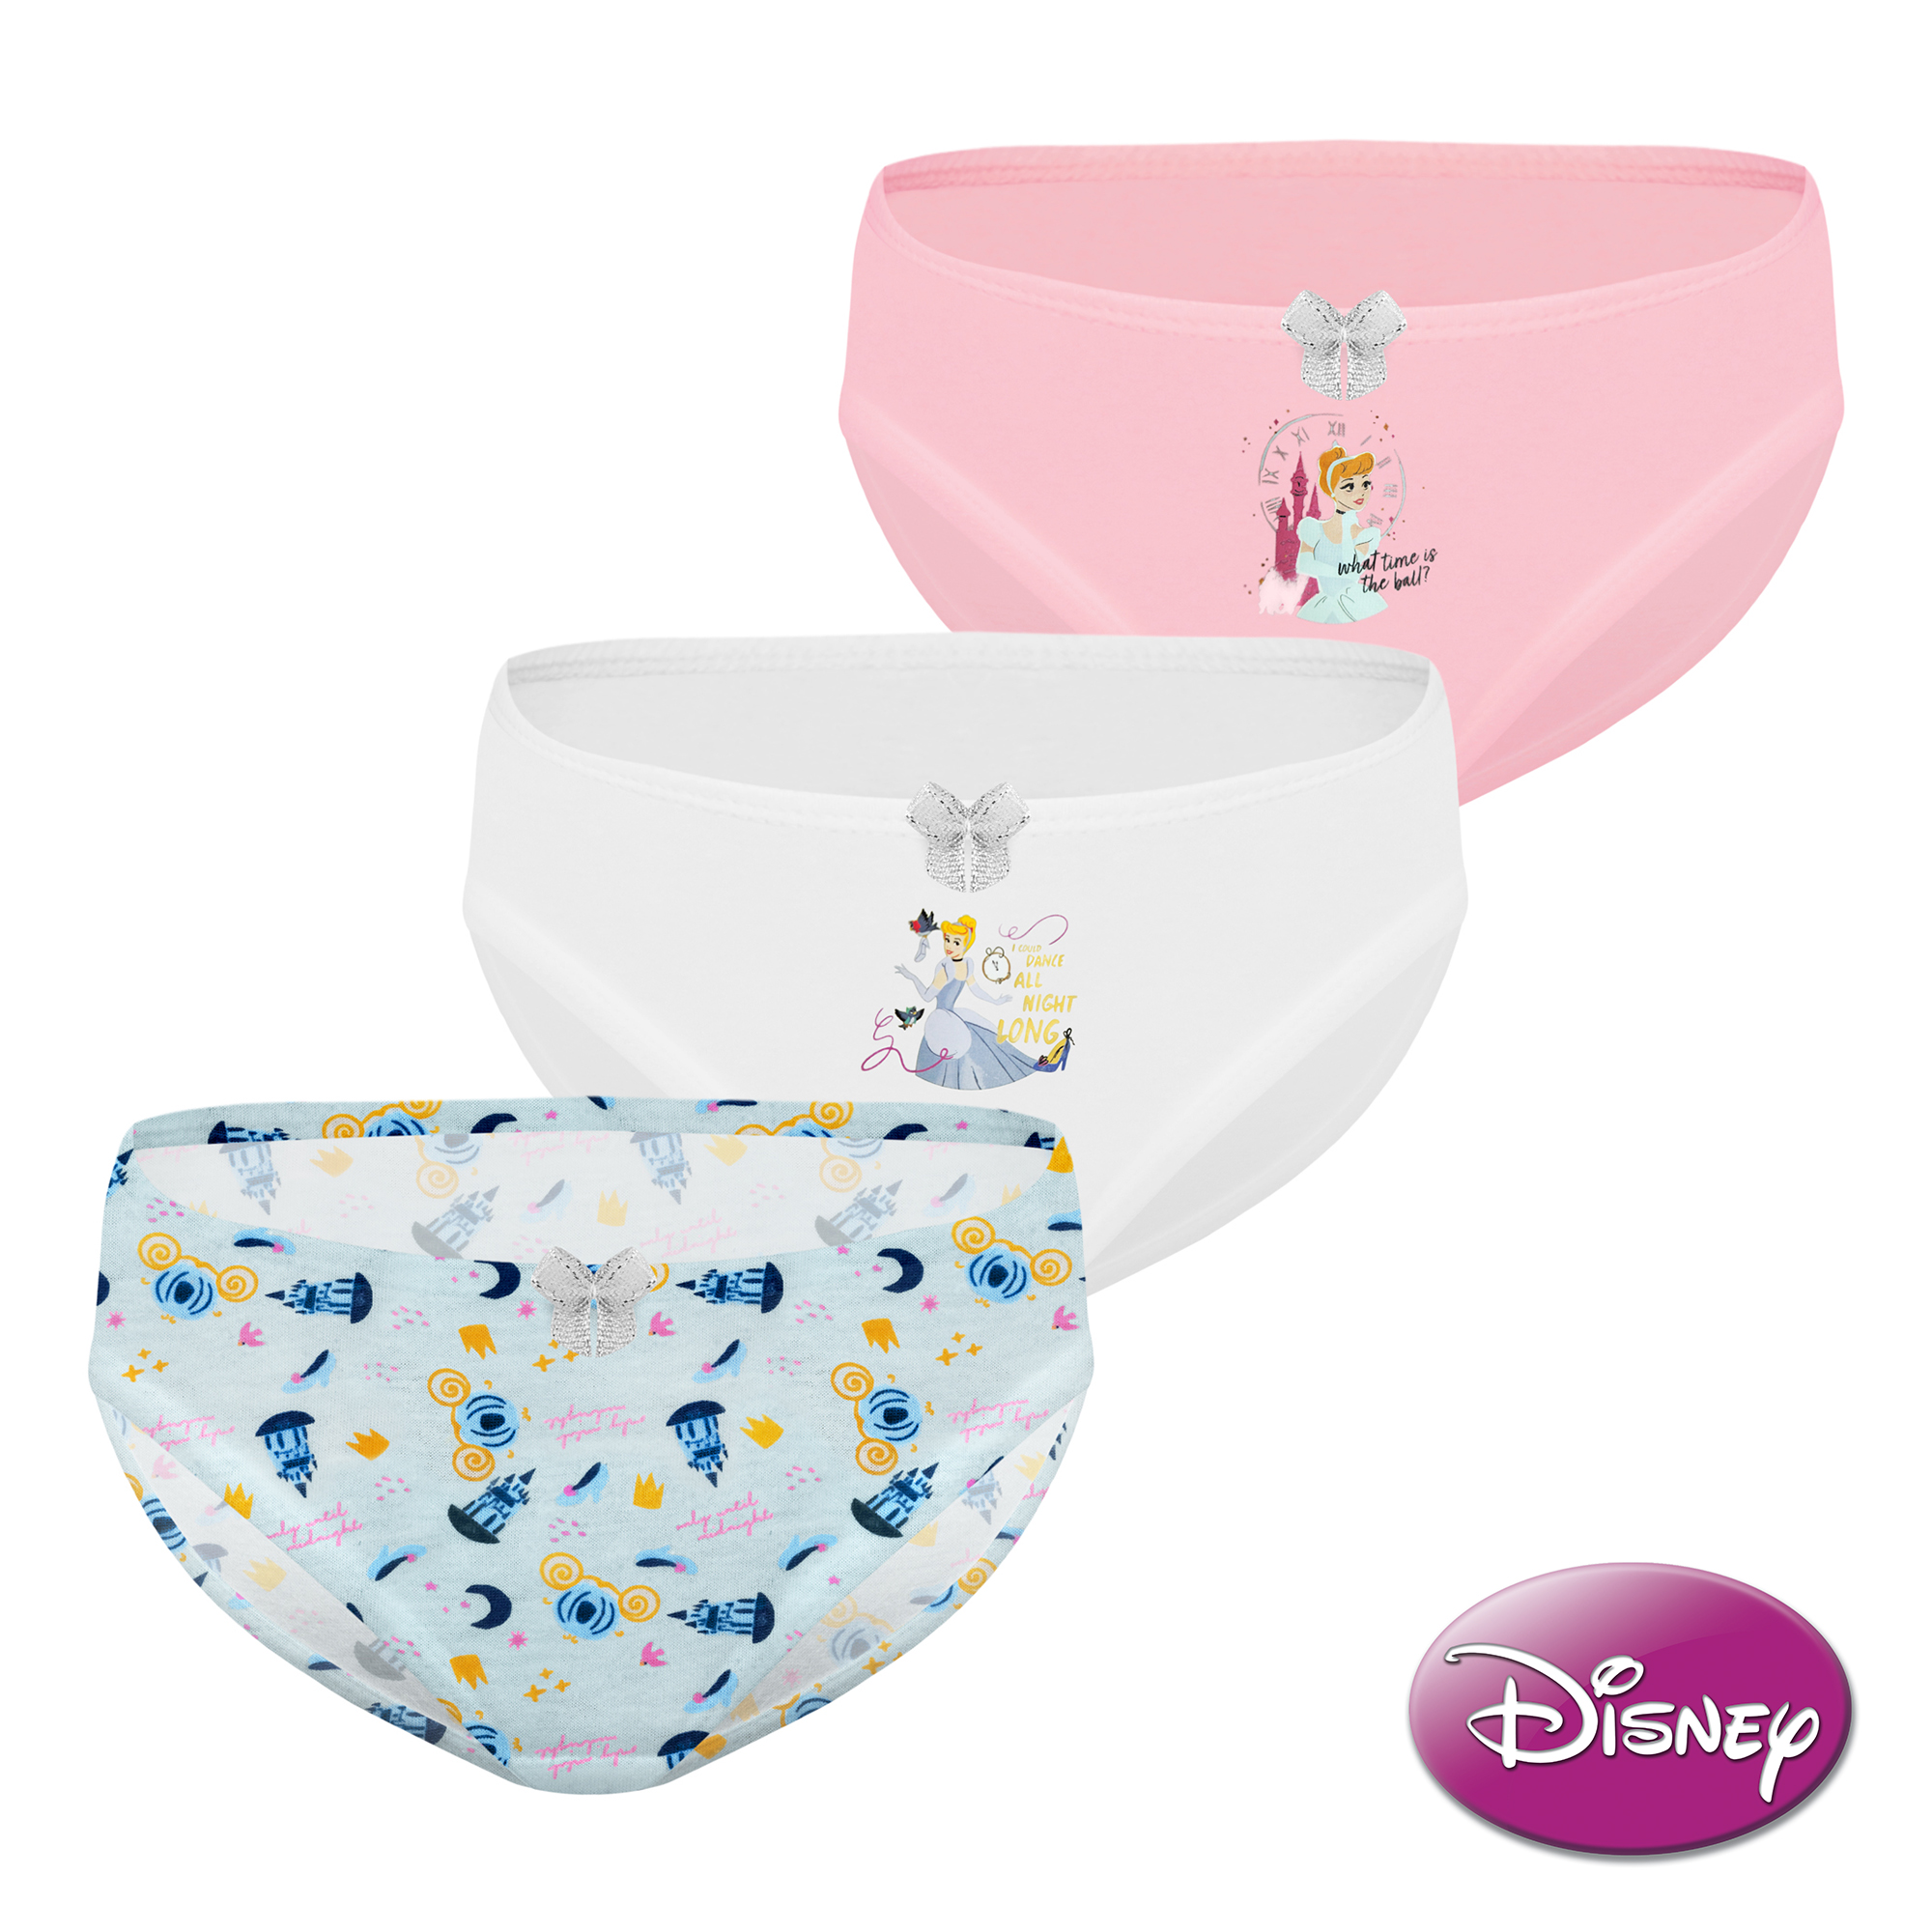 Disney Princess 3-in-1 Pack Bikini Panty Girls Kids Underwear